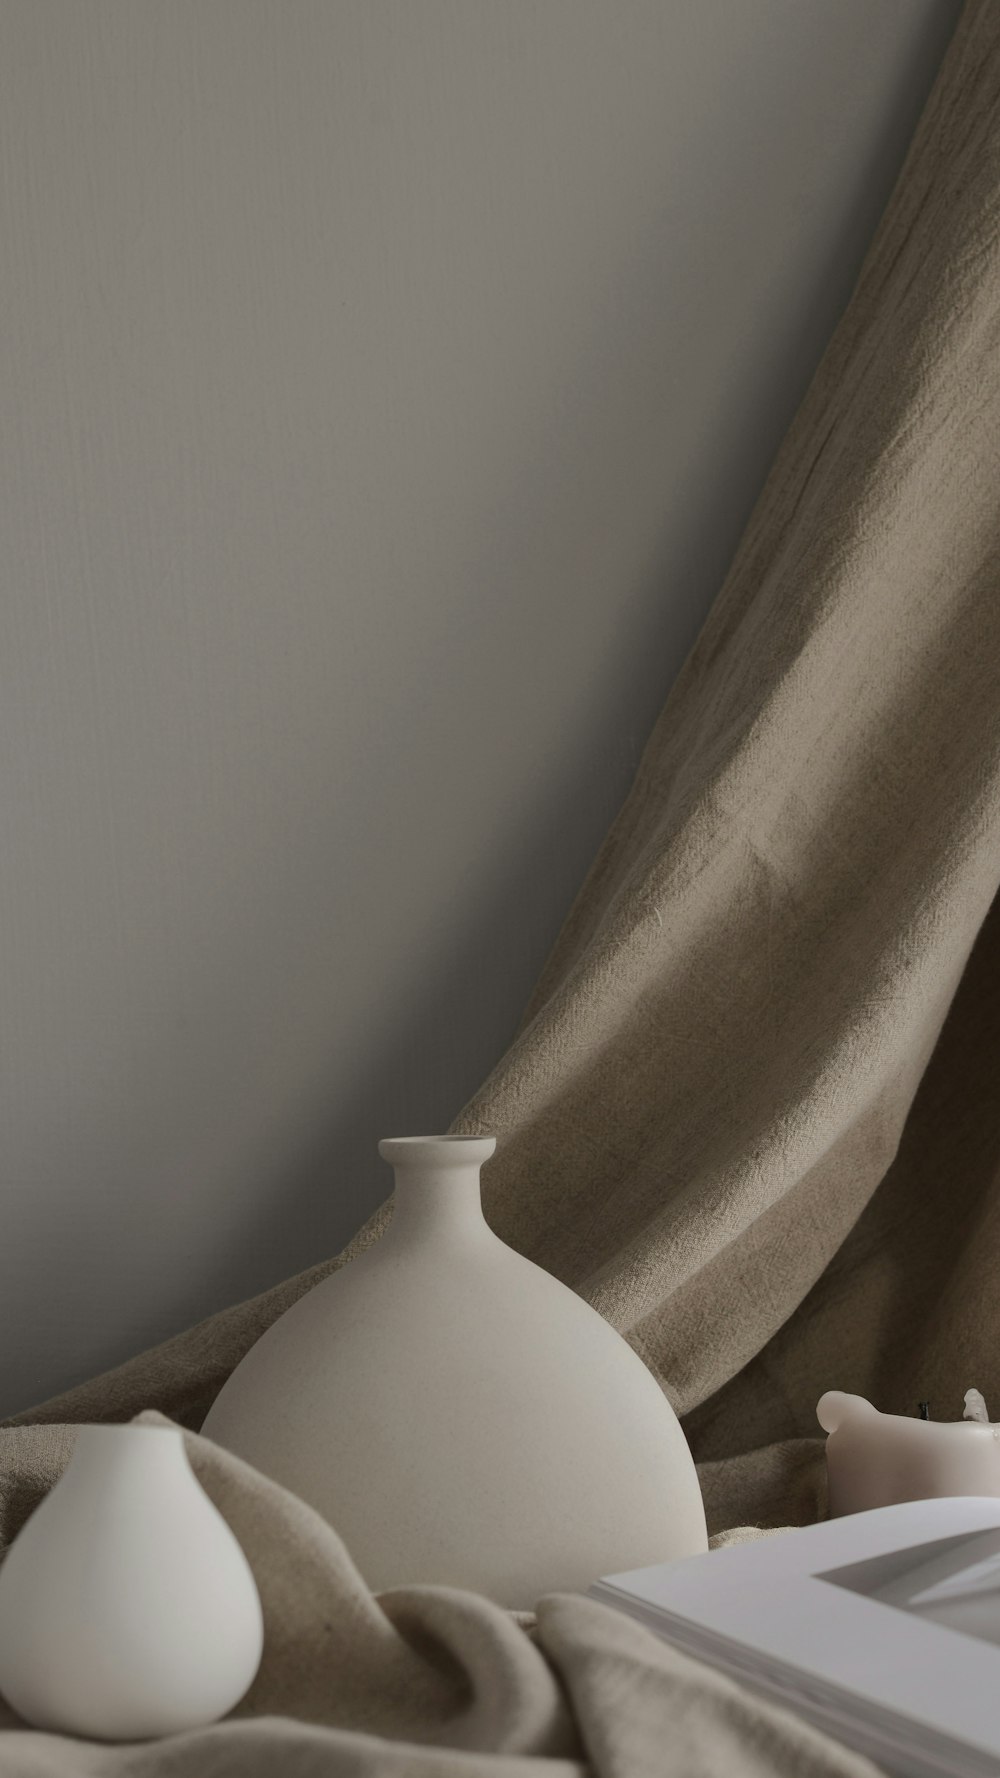 minimalist photography of two white ceramic vases